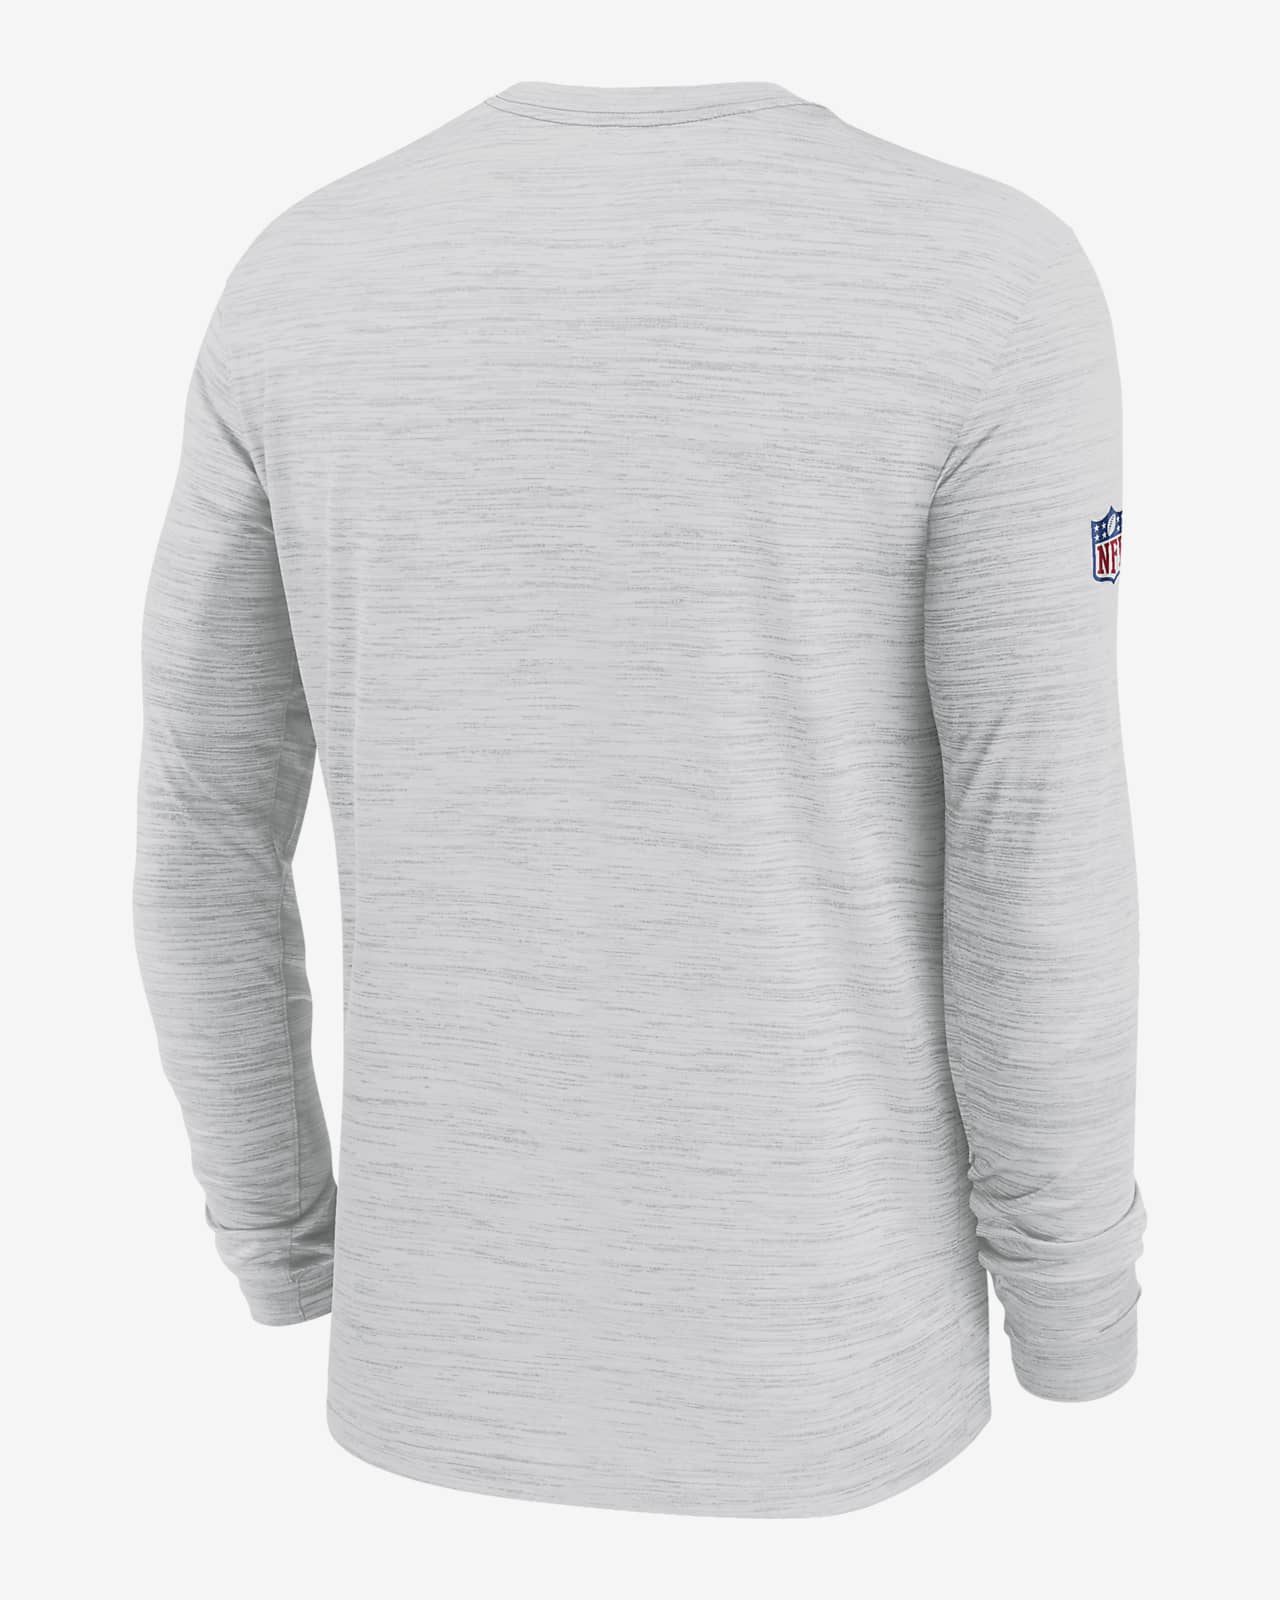 Exclusive Men's Nike NFL Long Sleeve Mock Neck White Shirt